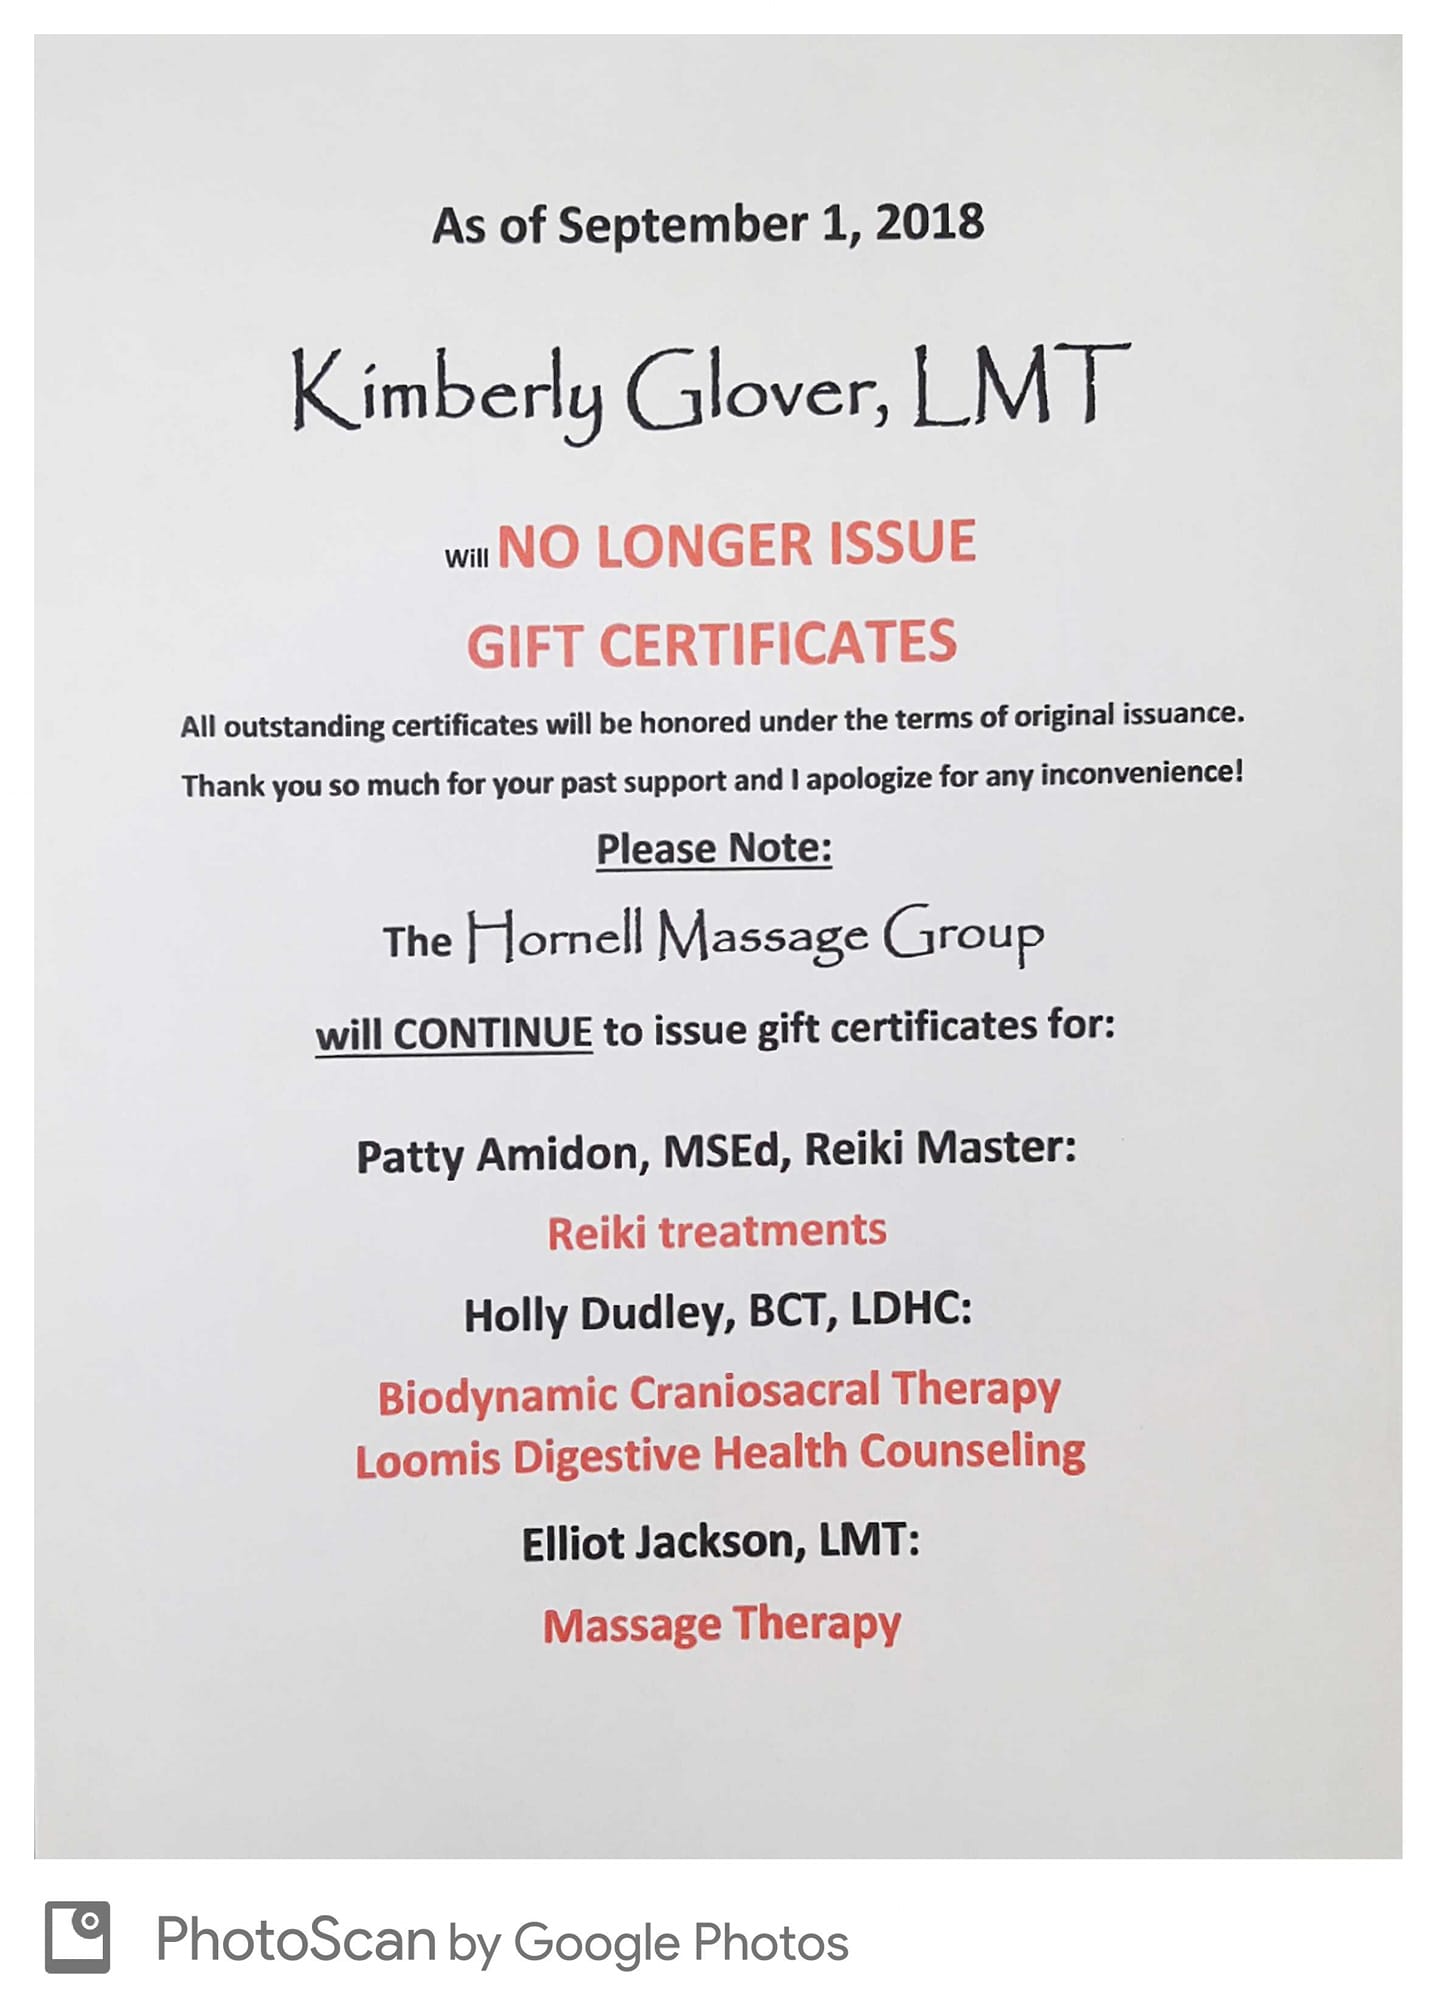 Kimberly Glover, L.M.T. 23 Main St, Hornell New York 14843